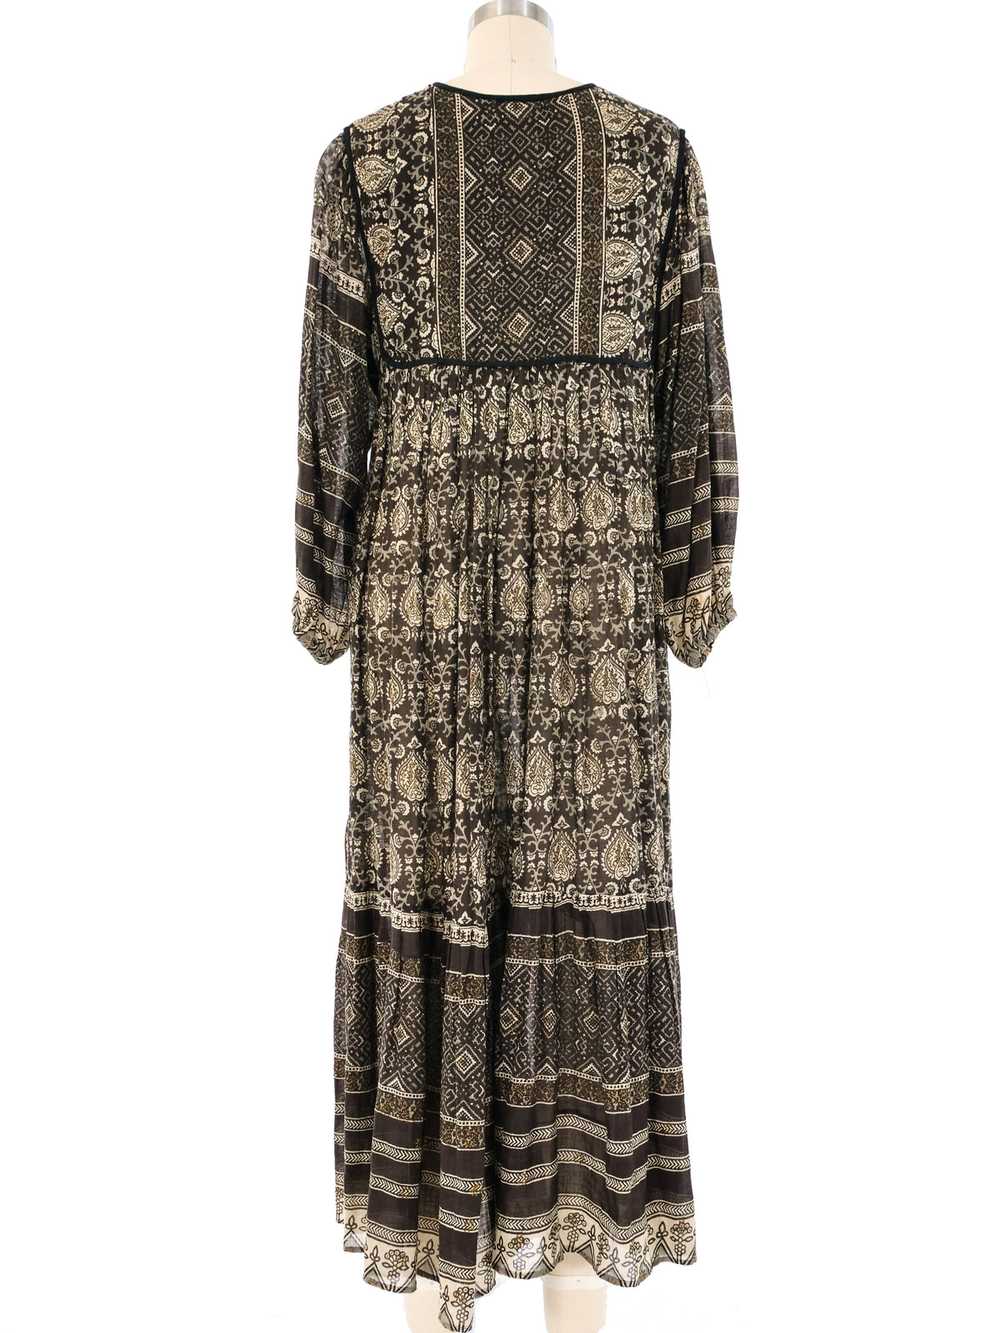 Paisley Block Printed Indian Dress - image 4